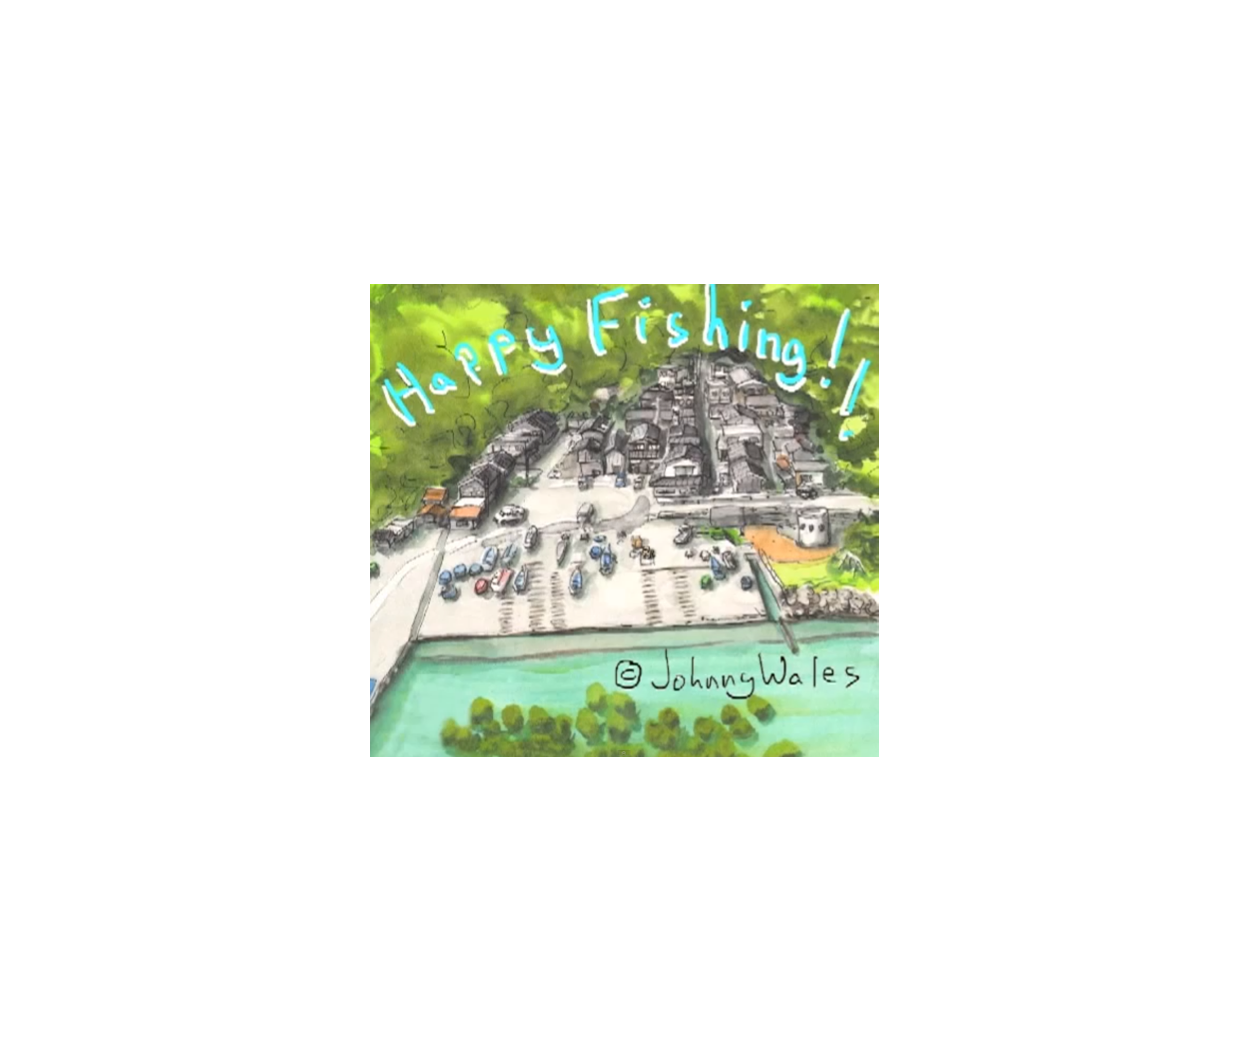 ‘Happy Fishing!’
A successful morning’s catch near my home 
on Sado Island, Japan.

￼

http://www.youtube.com/watch?v=CAtkcxbuBIE